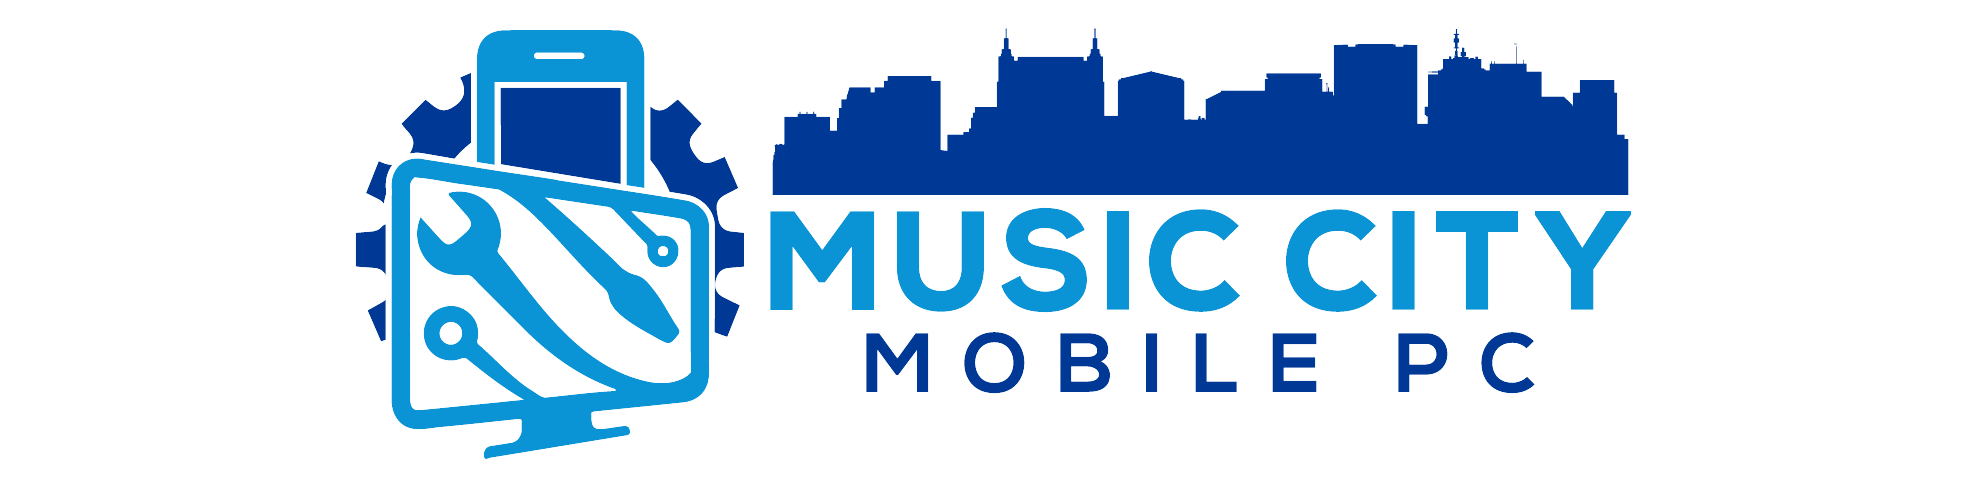 Music City Mobile PC Repair Services in Nashville